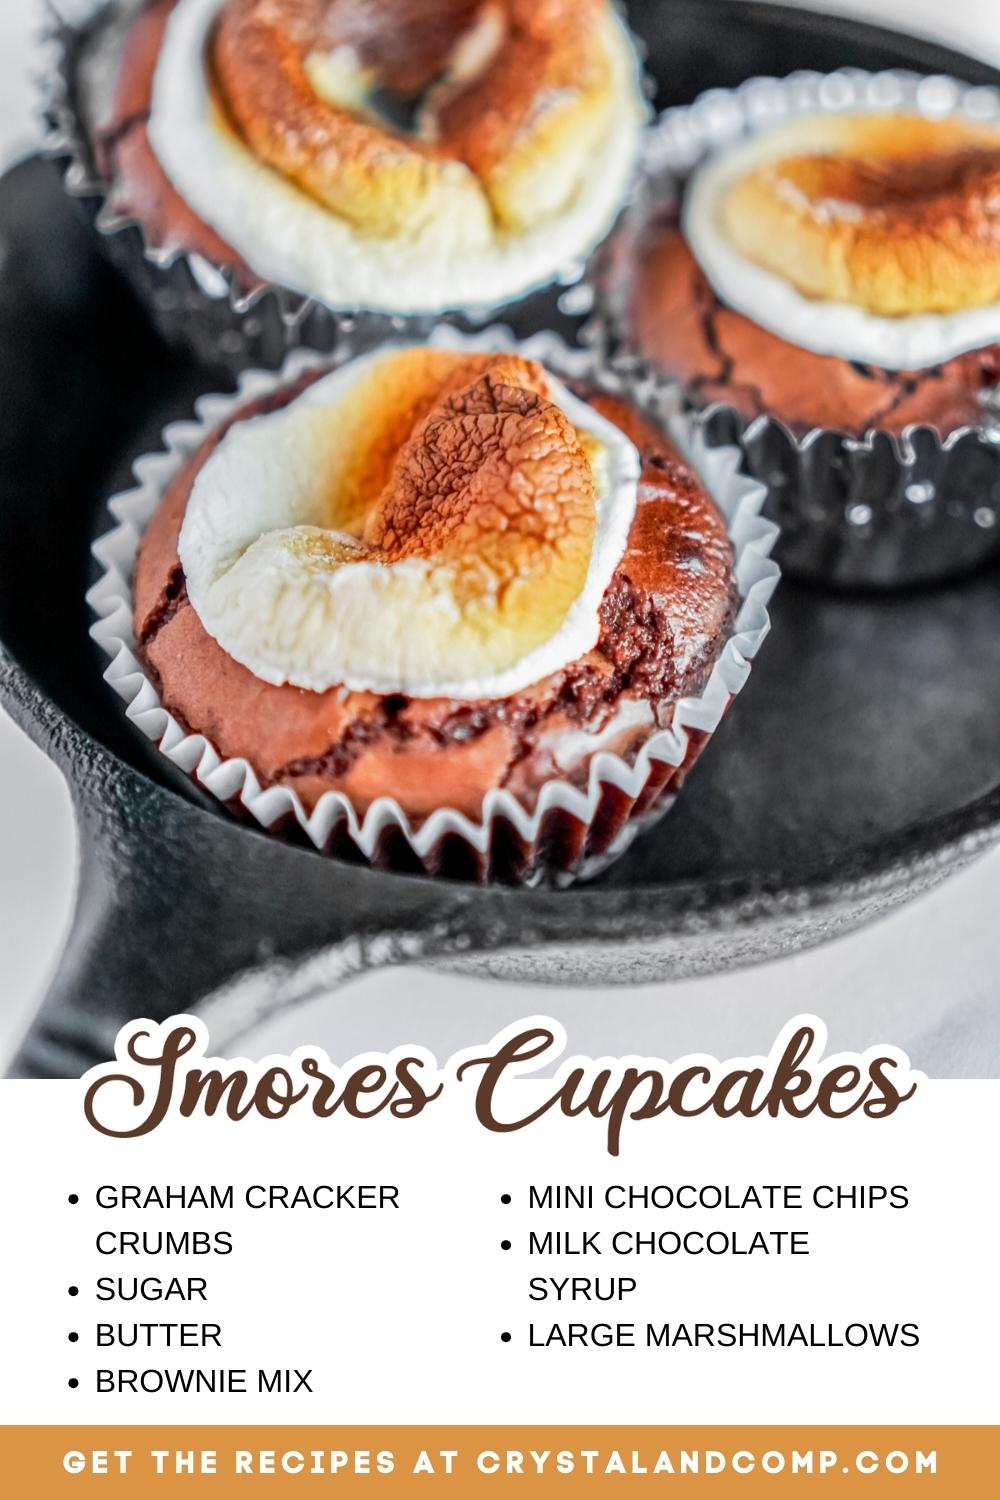 smores cupcakes ingredients list